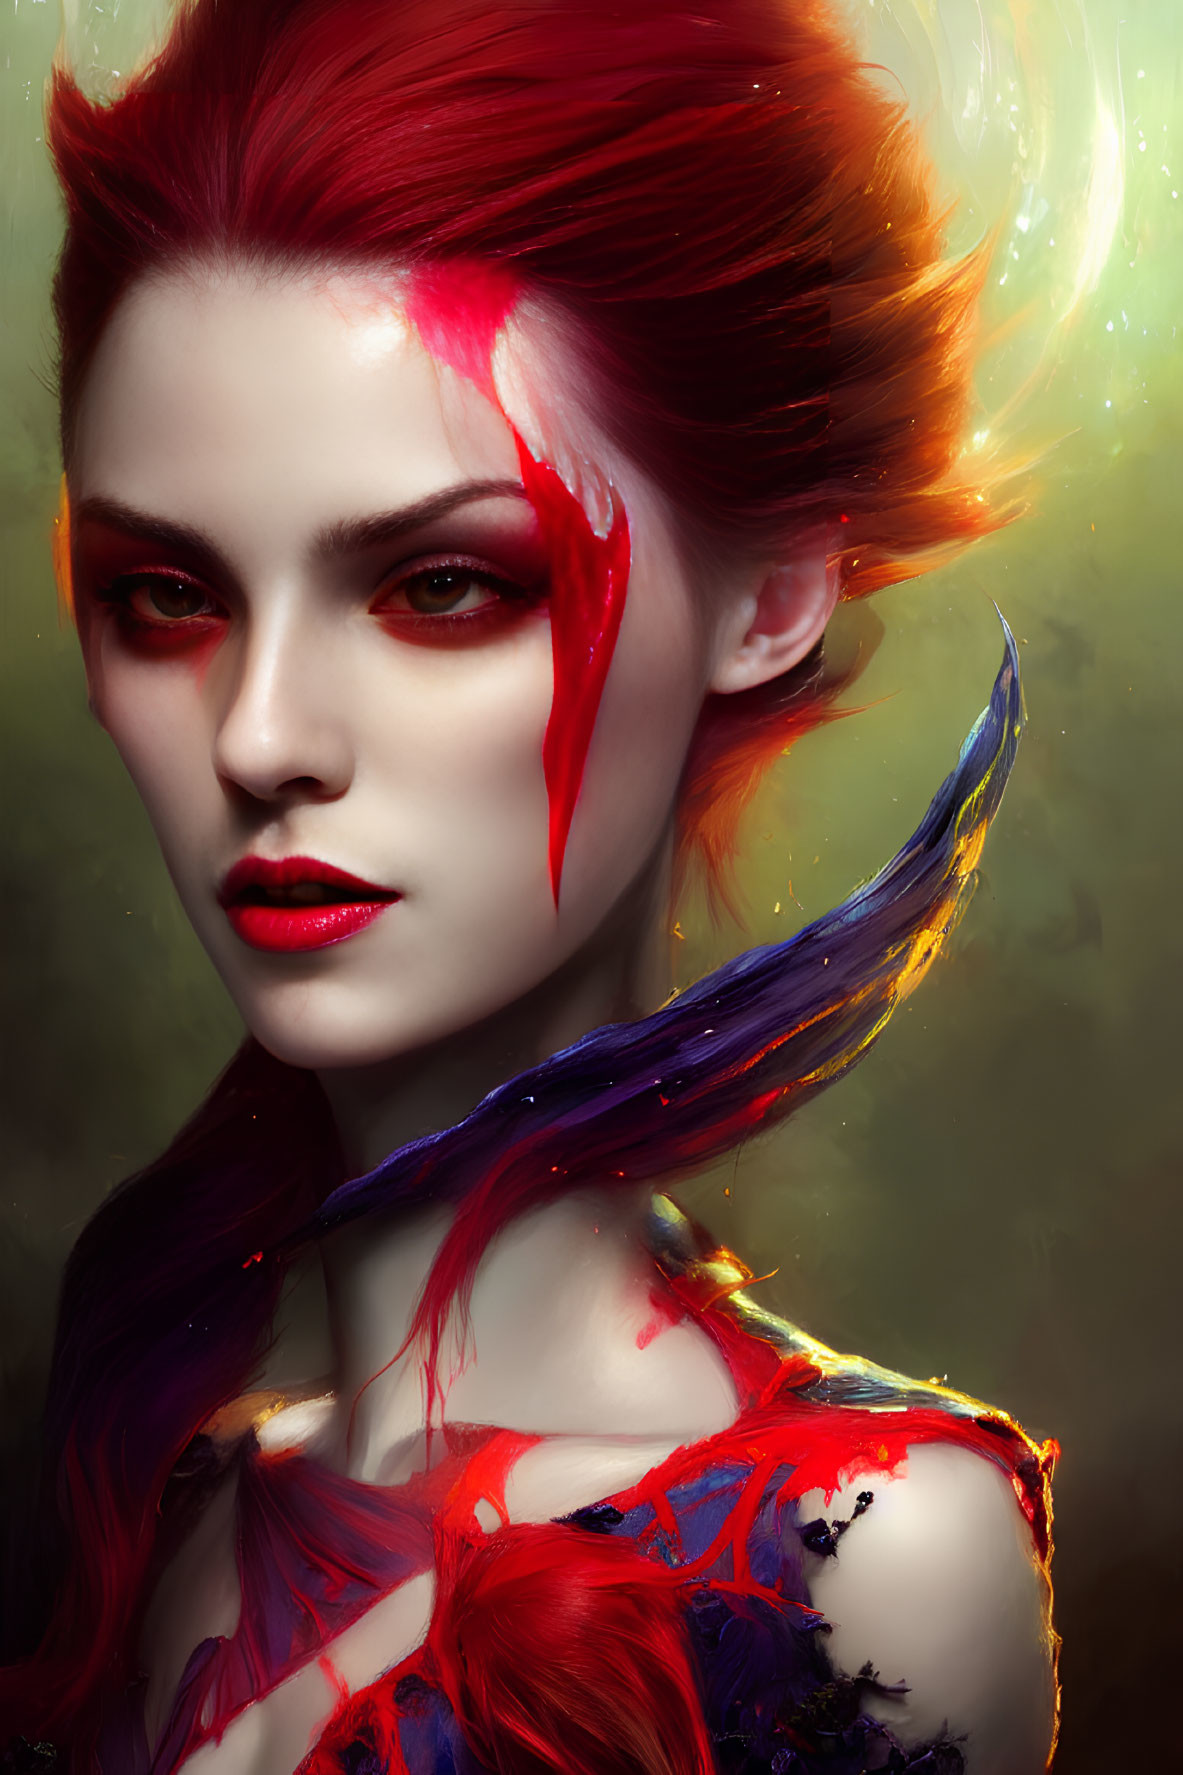 Digital Art: Woman with Red Hair, Eyes, and Tear Streak